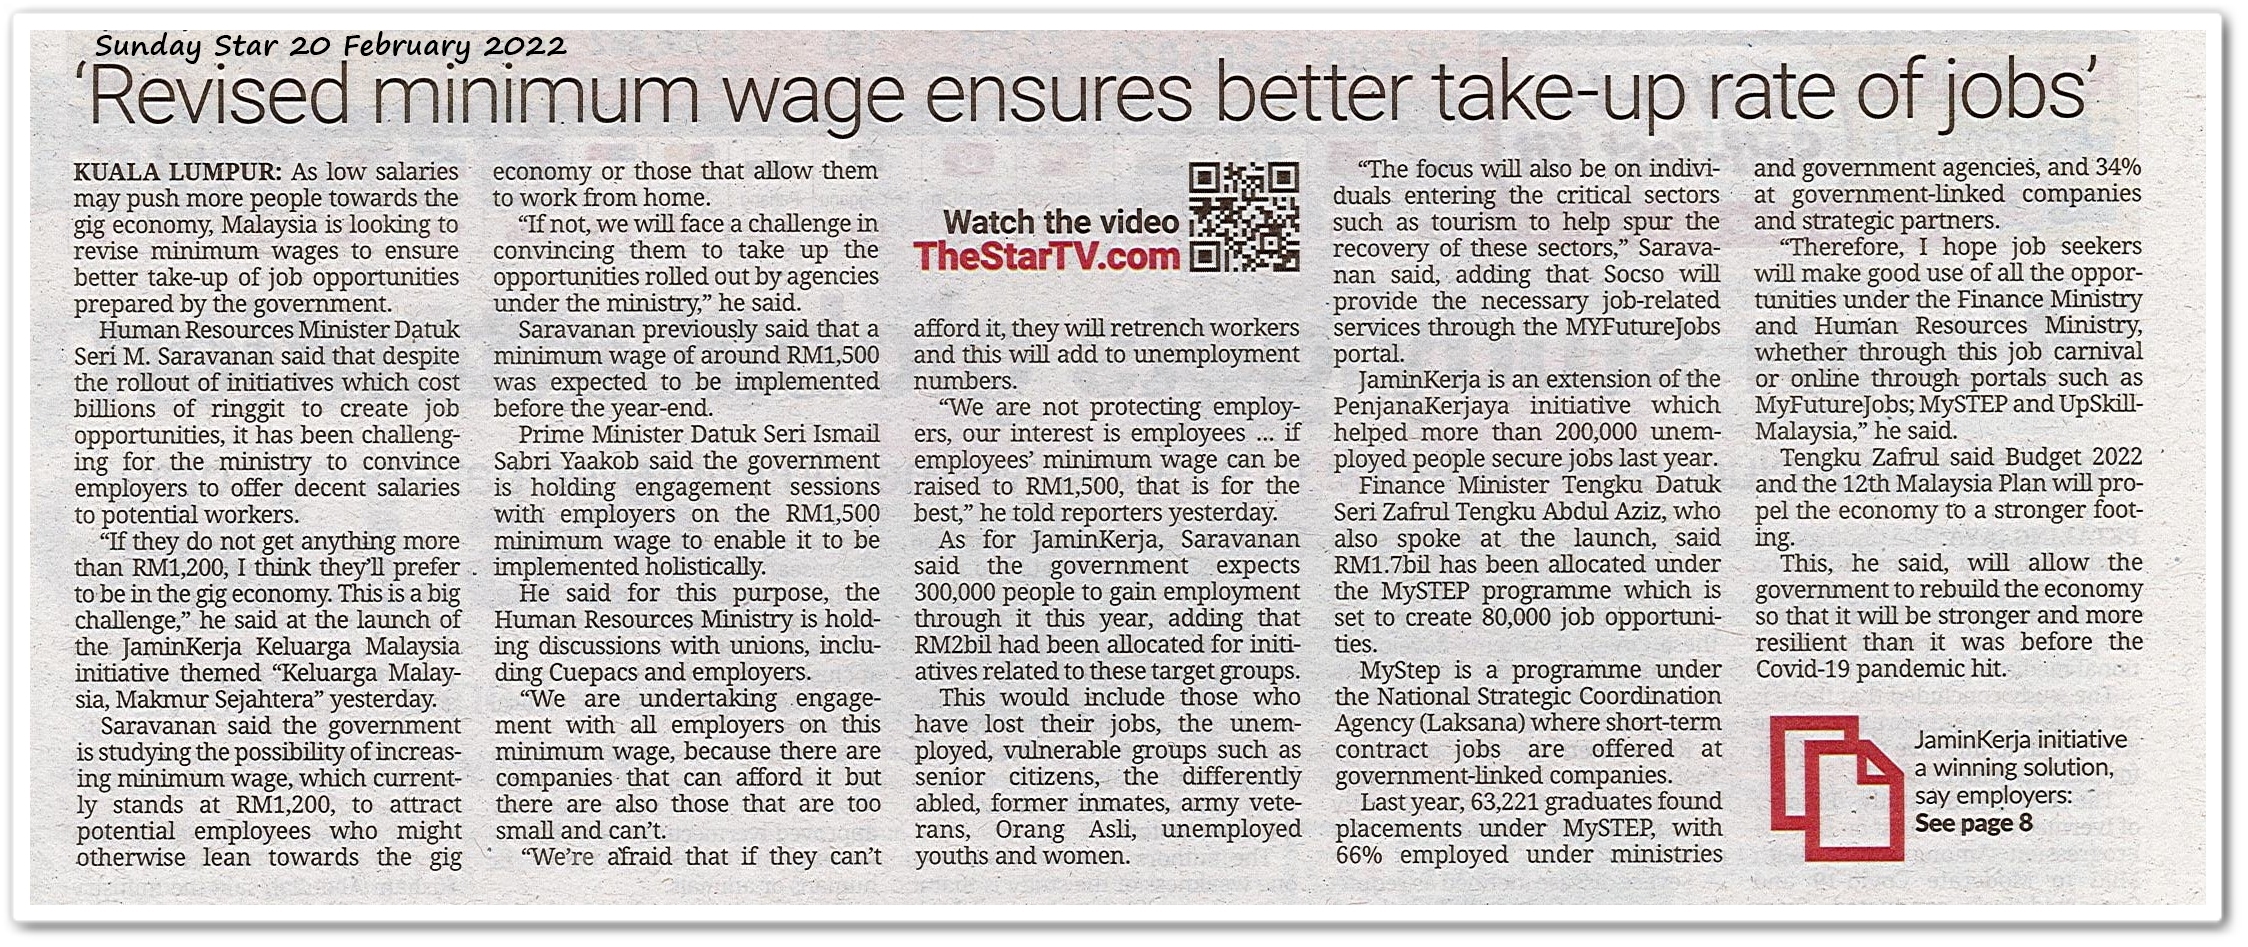 'Revised minimum wage ensures better take-up rate of jobs - Keratan akhbar Sunday Star 20 February 2022